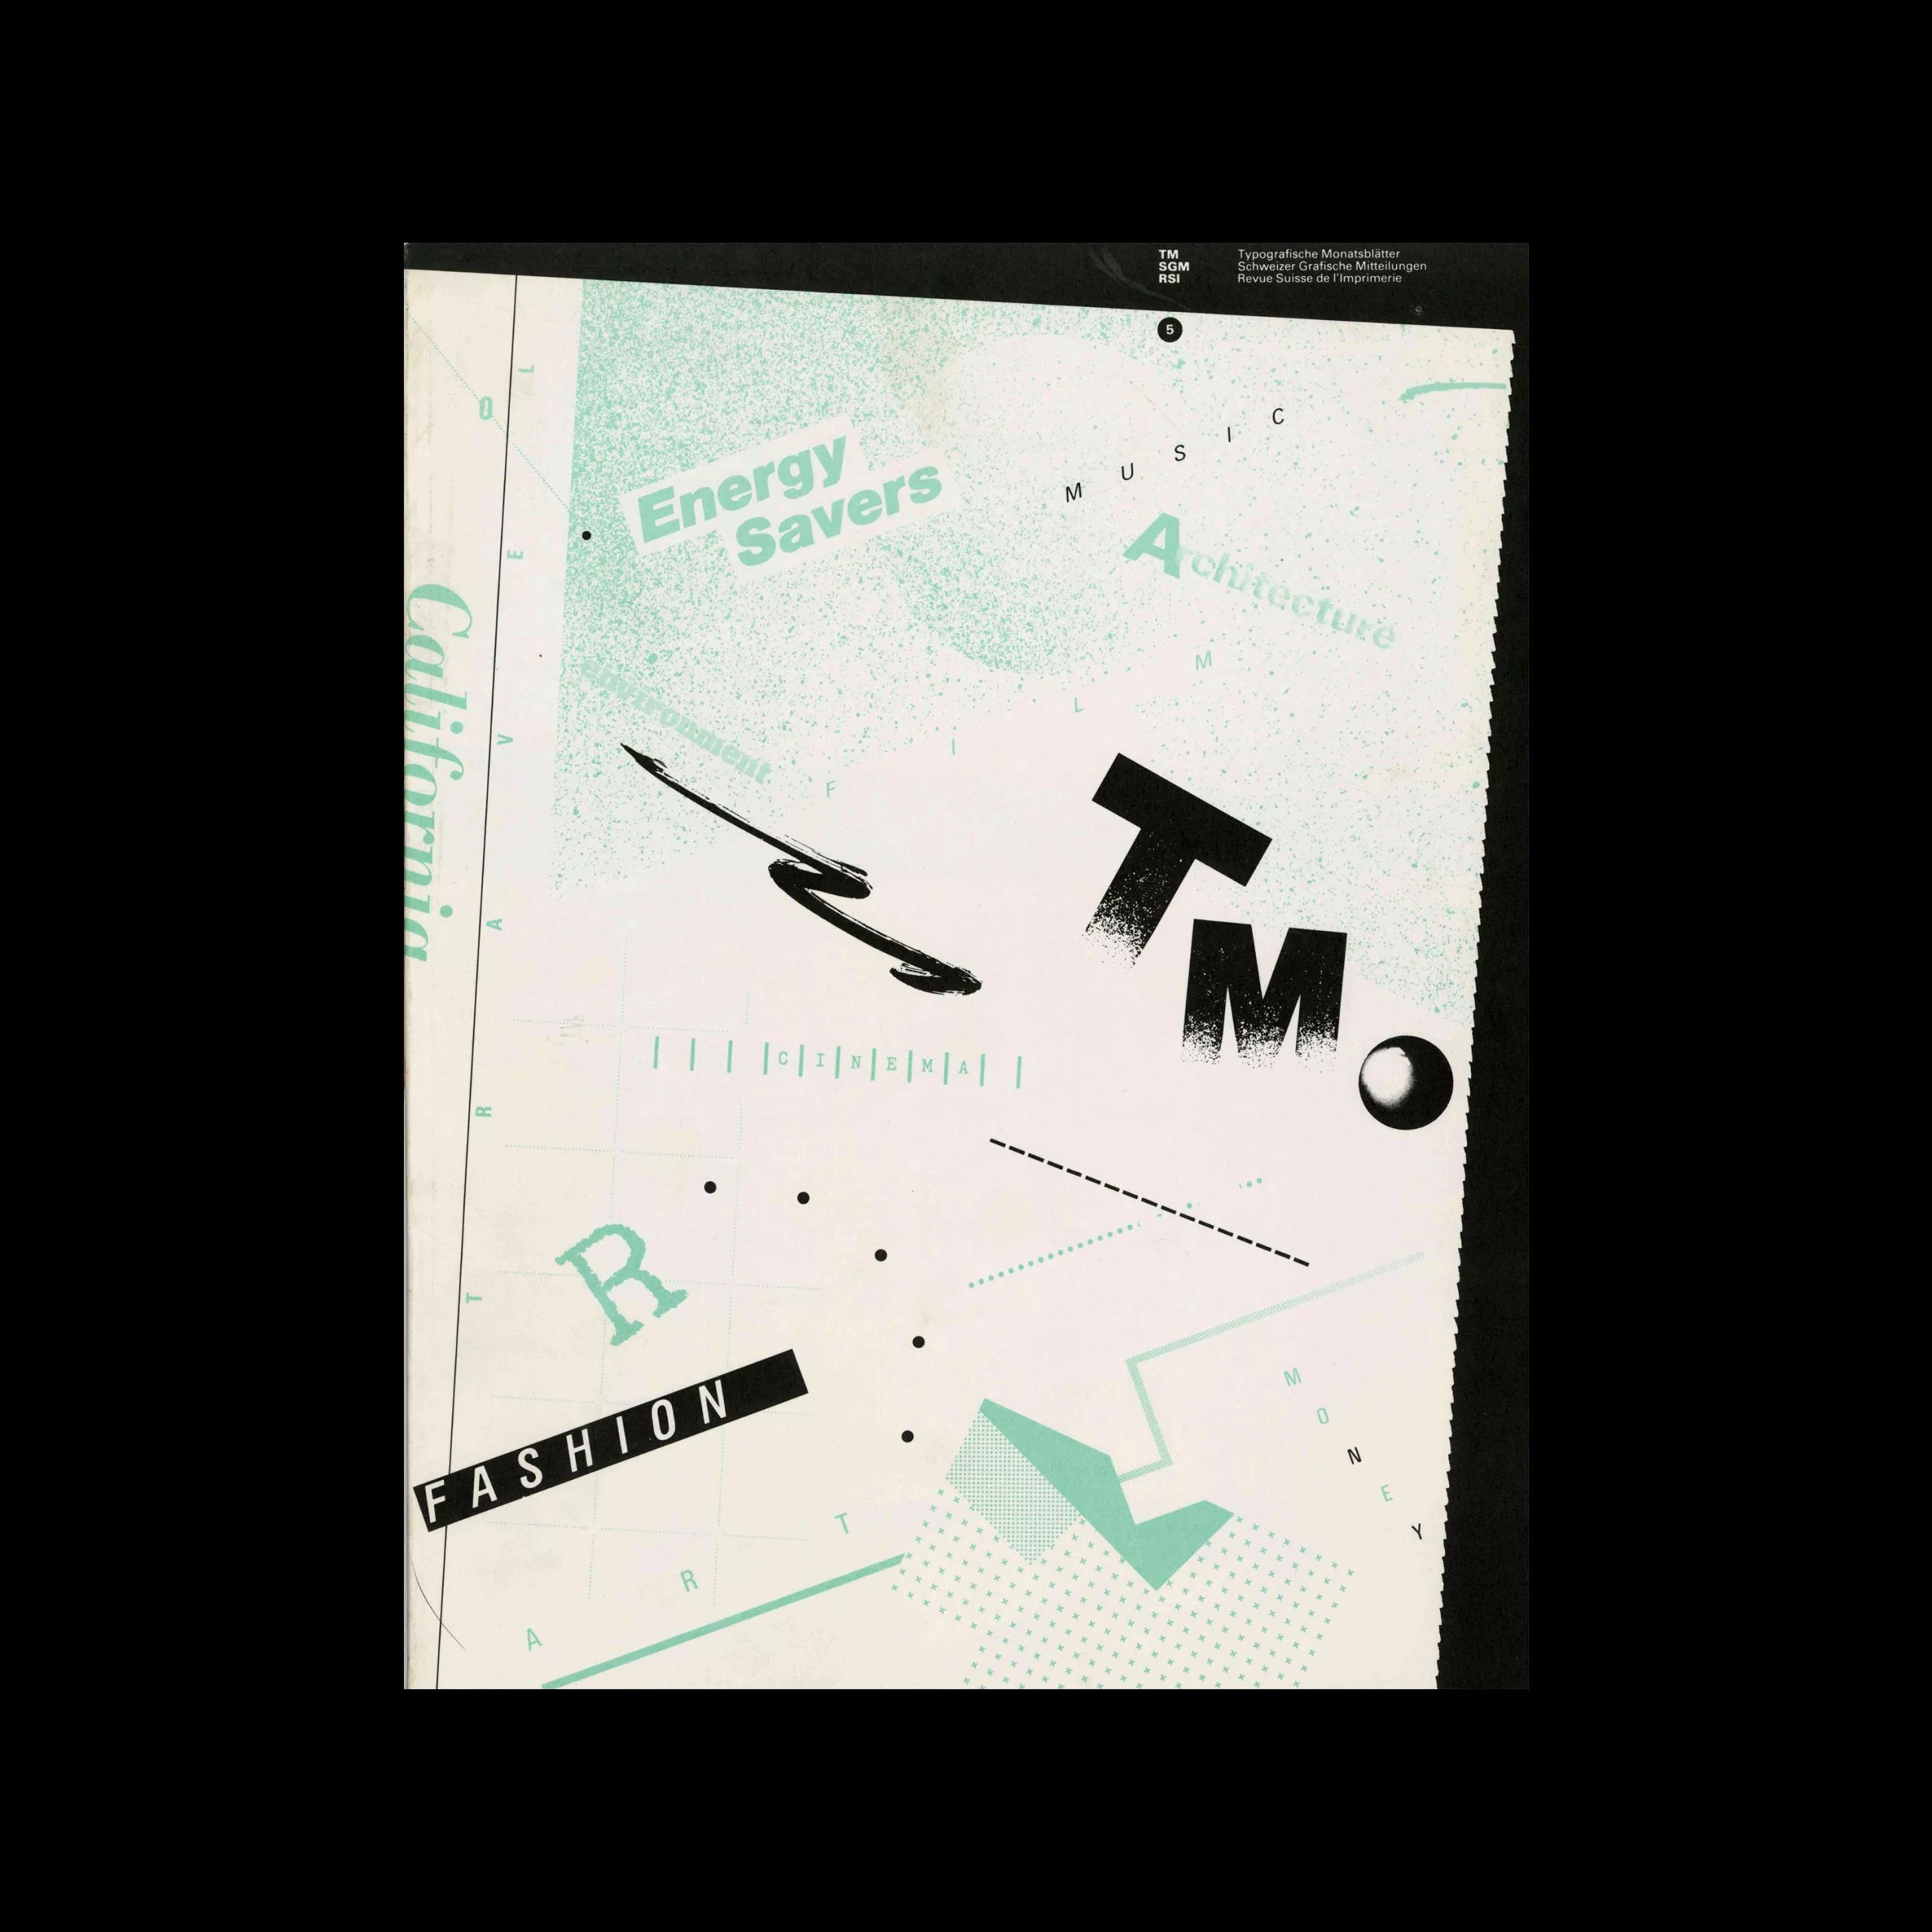 Typografische Monatsblätter, 5, 1980. Cover design by Willi Kunz and Grace Kao